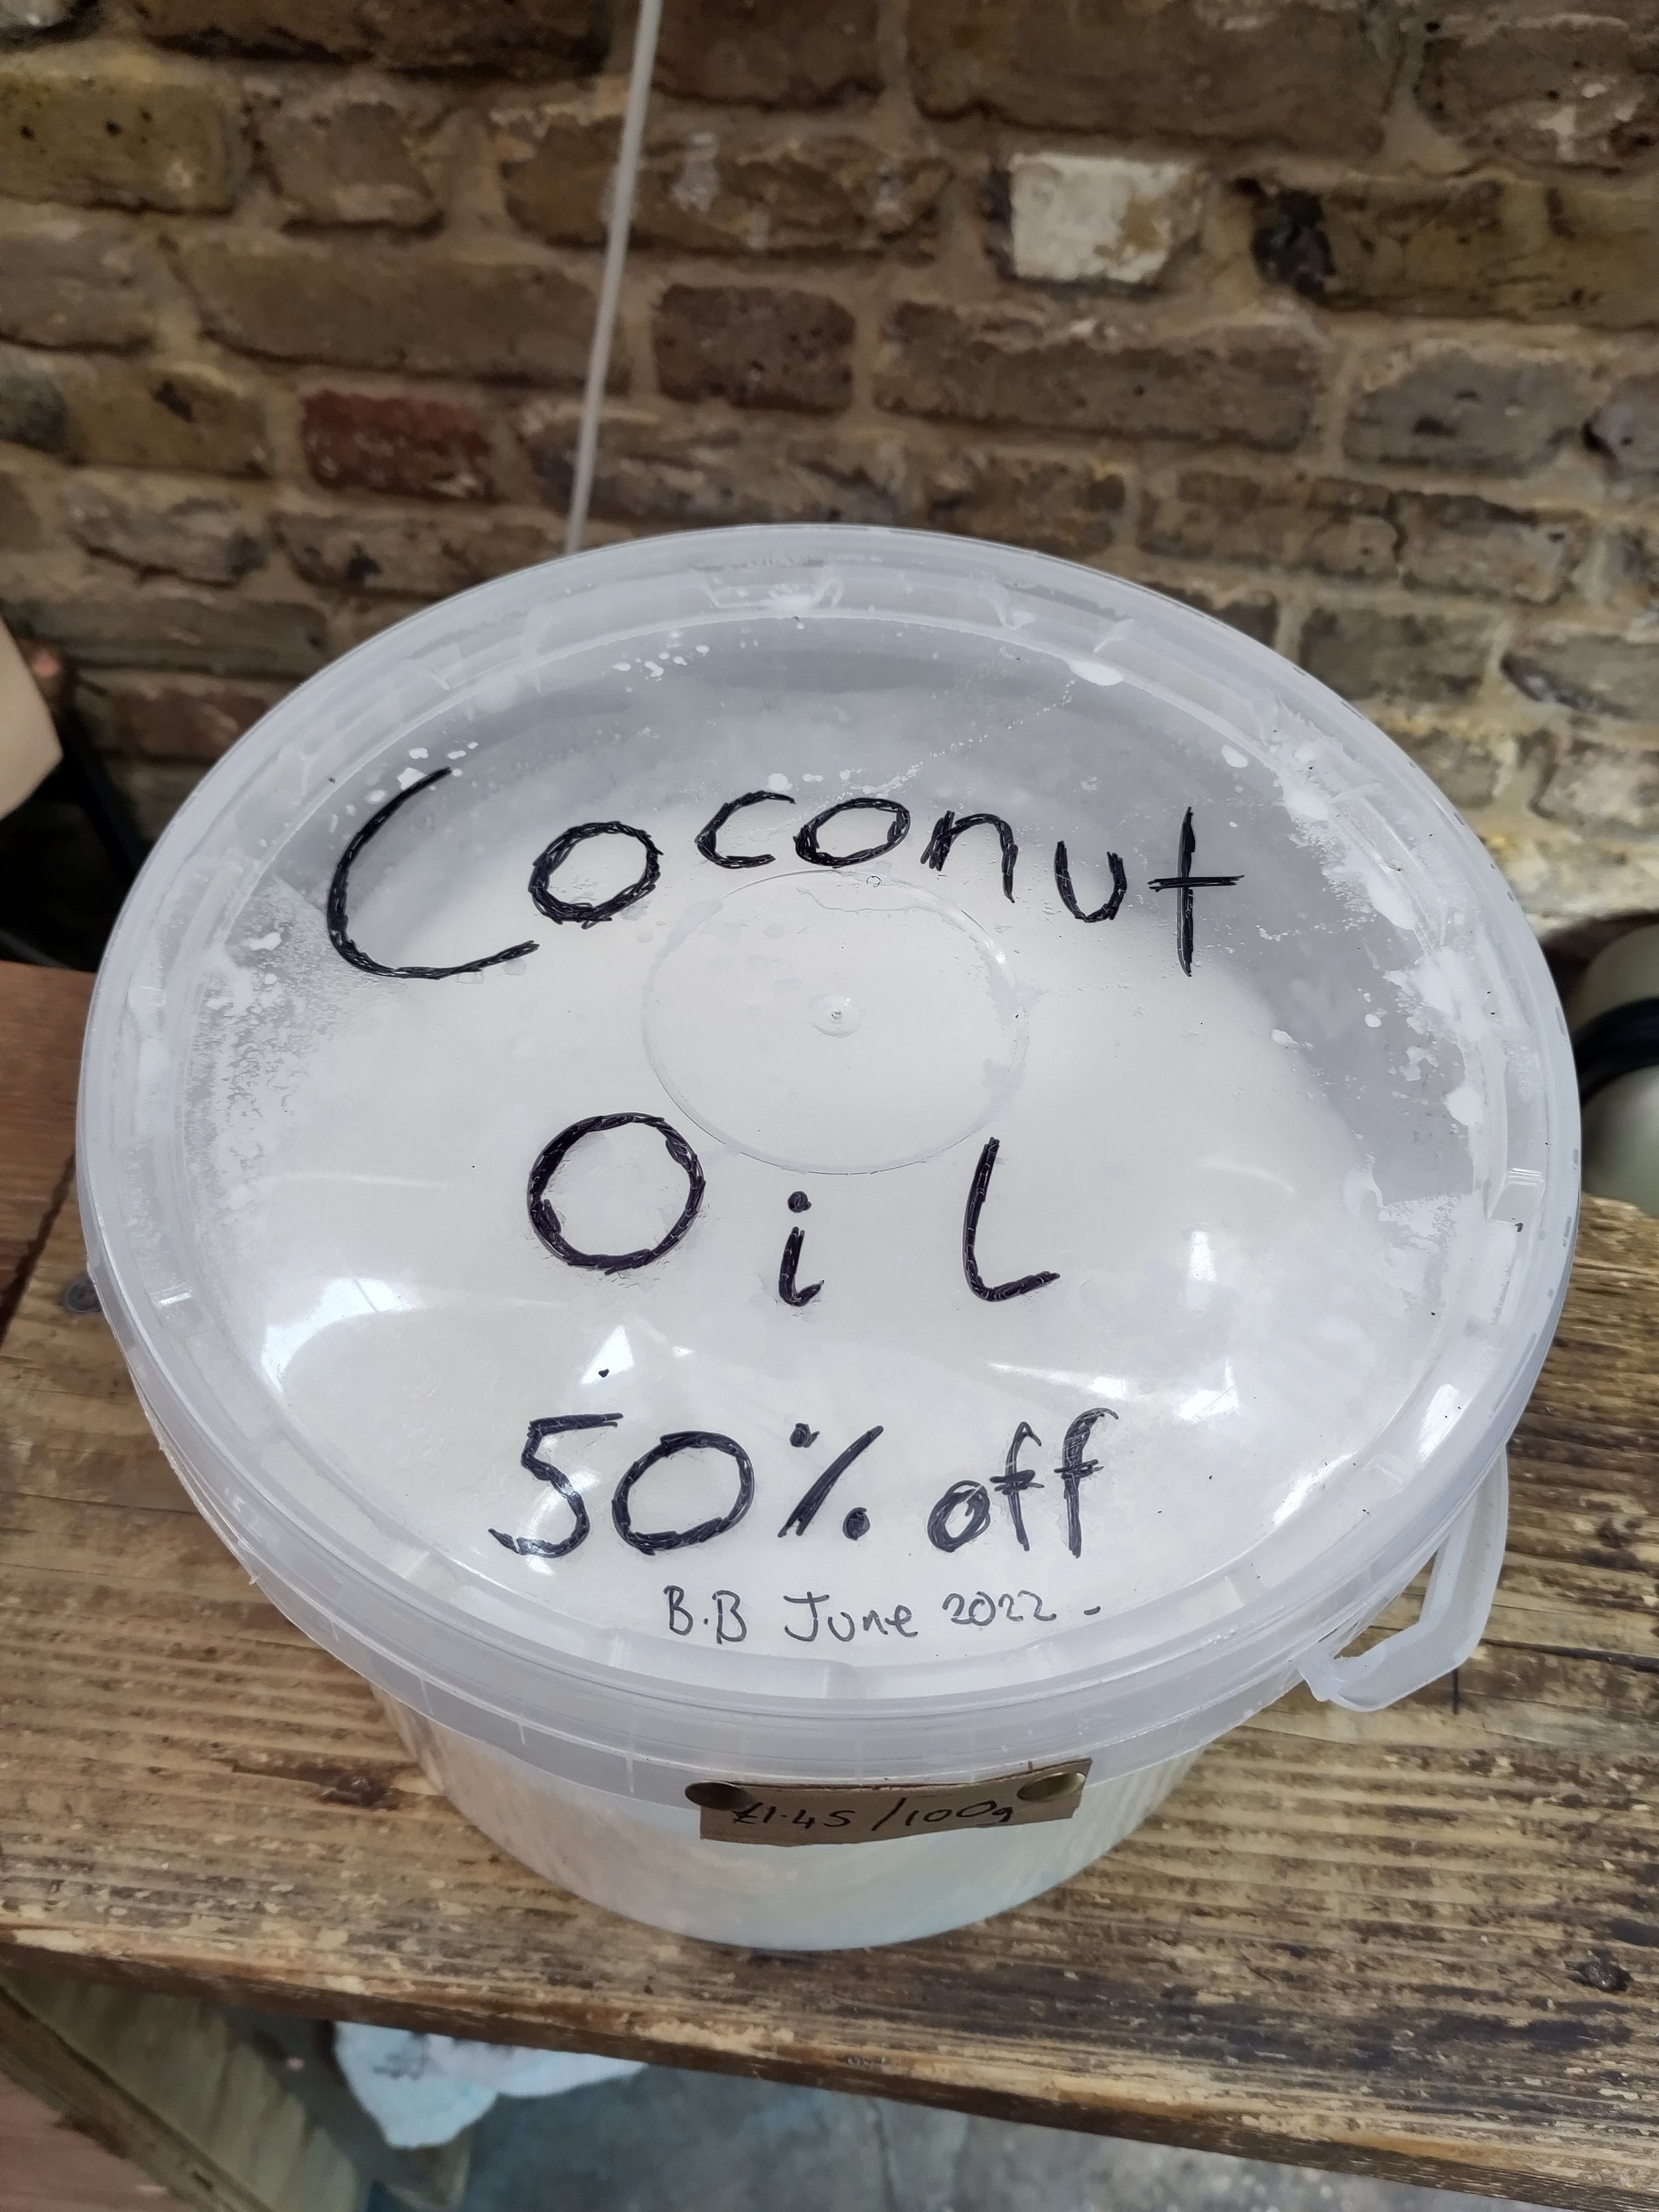 Coconut Oil Bulk 50% off